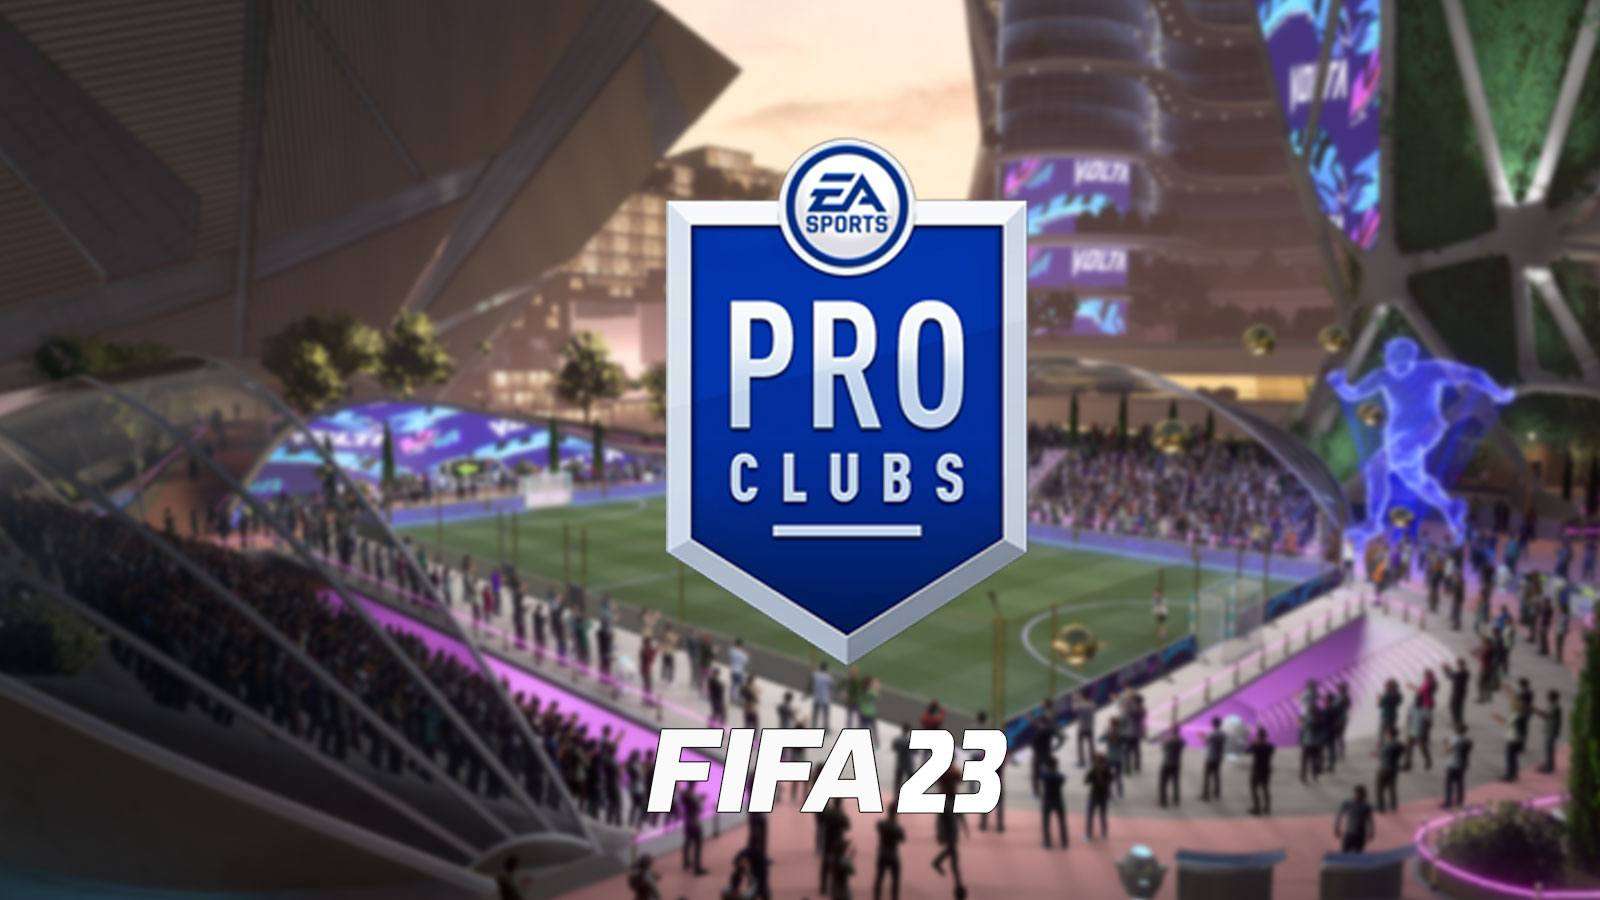 Club Pro FIFA 23